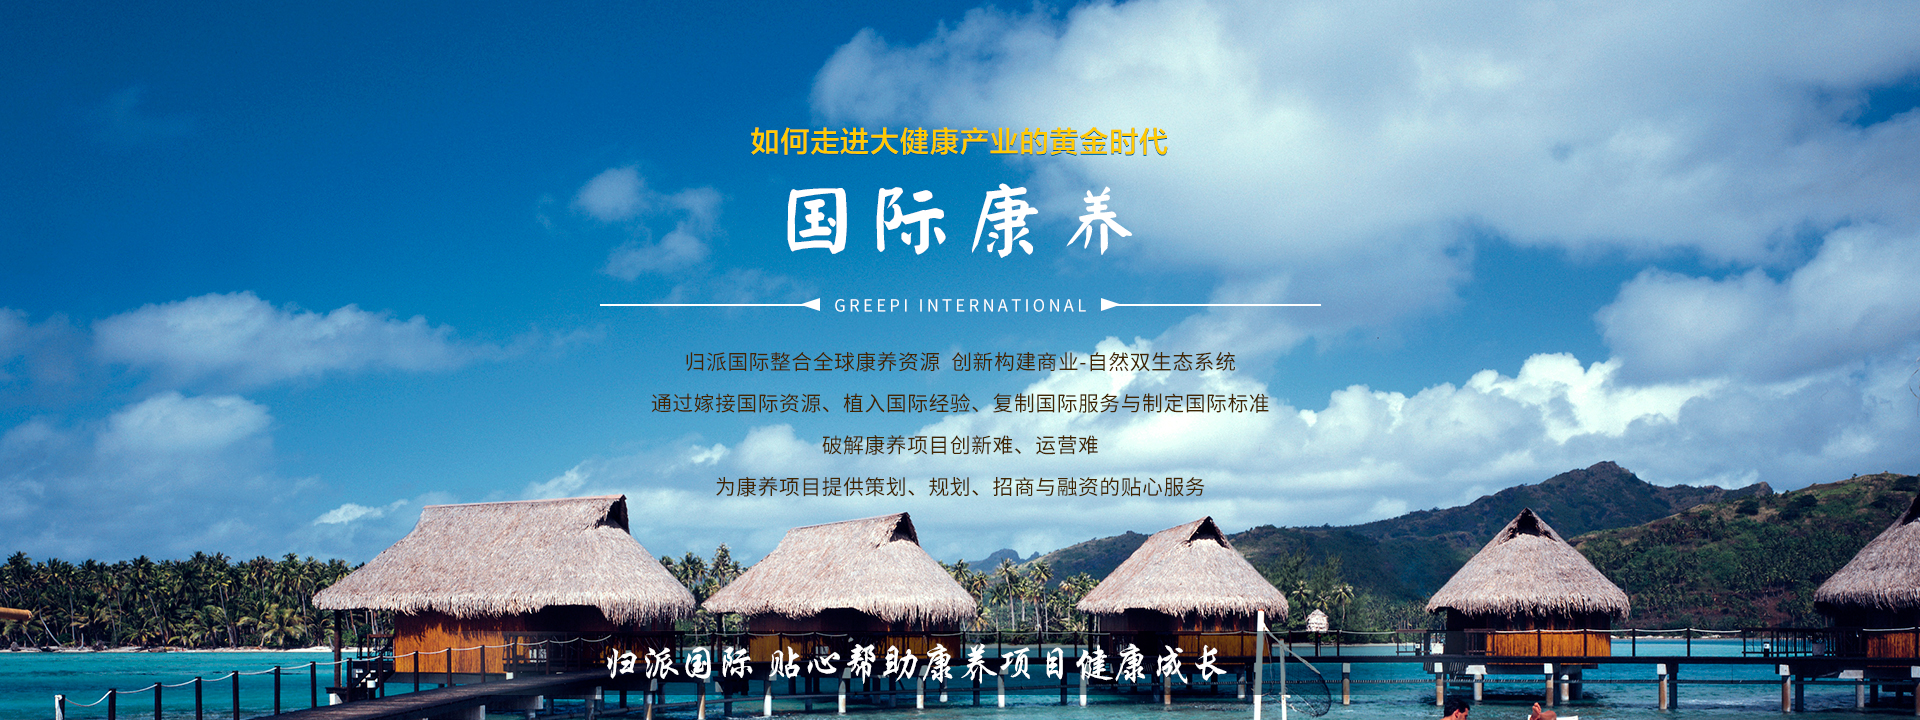 CQ9电子·(中国) 唯一官方网站